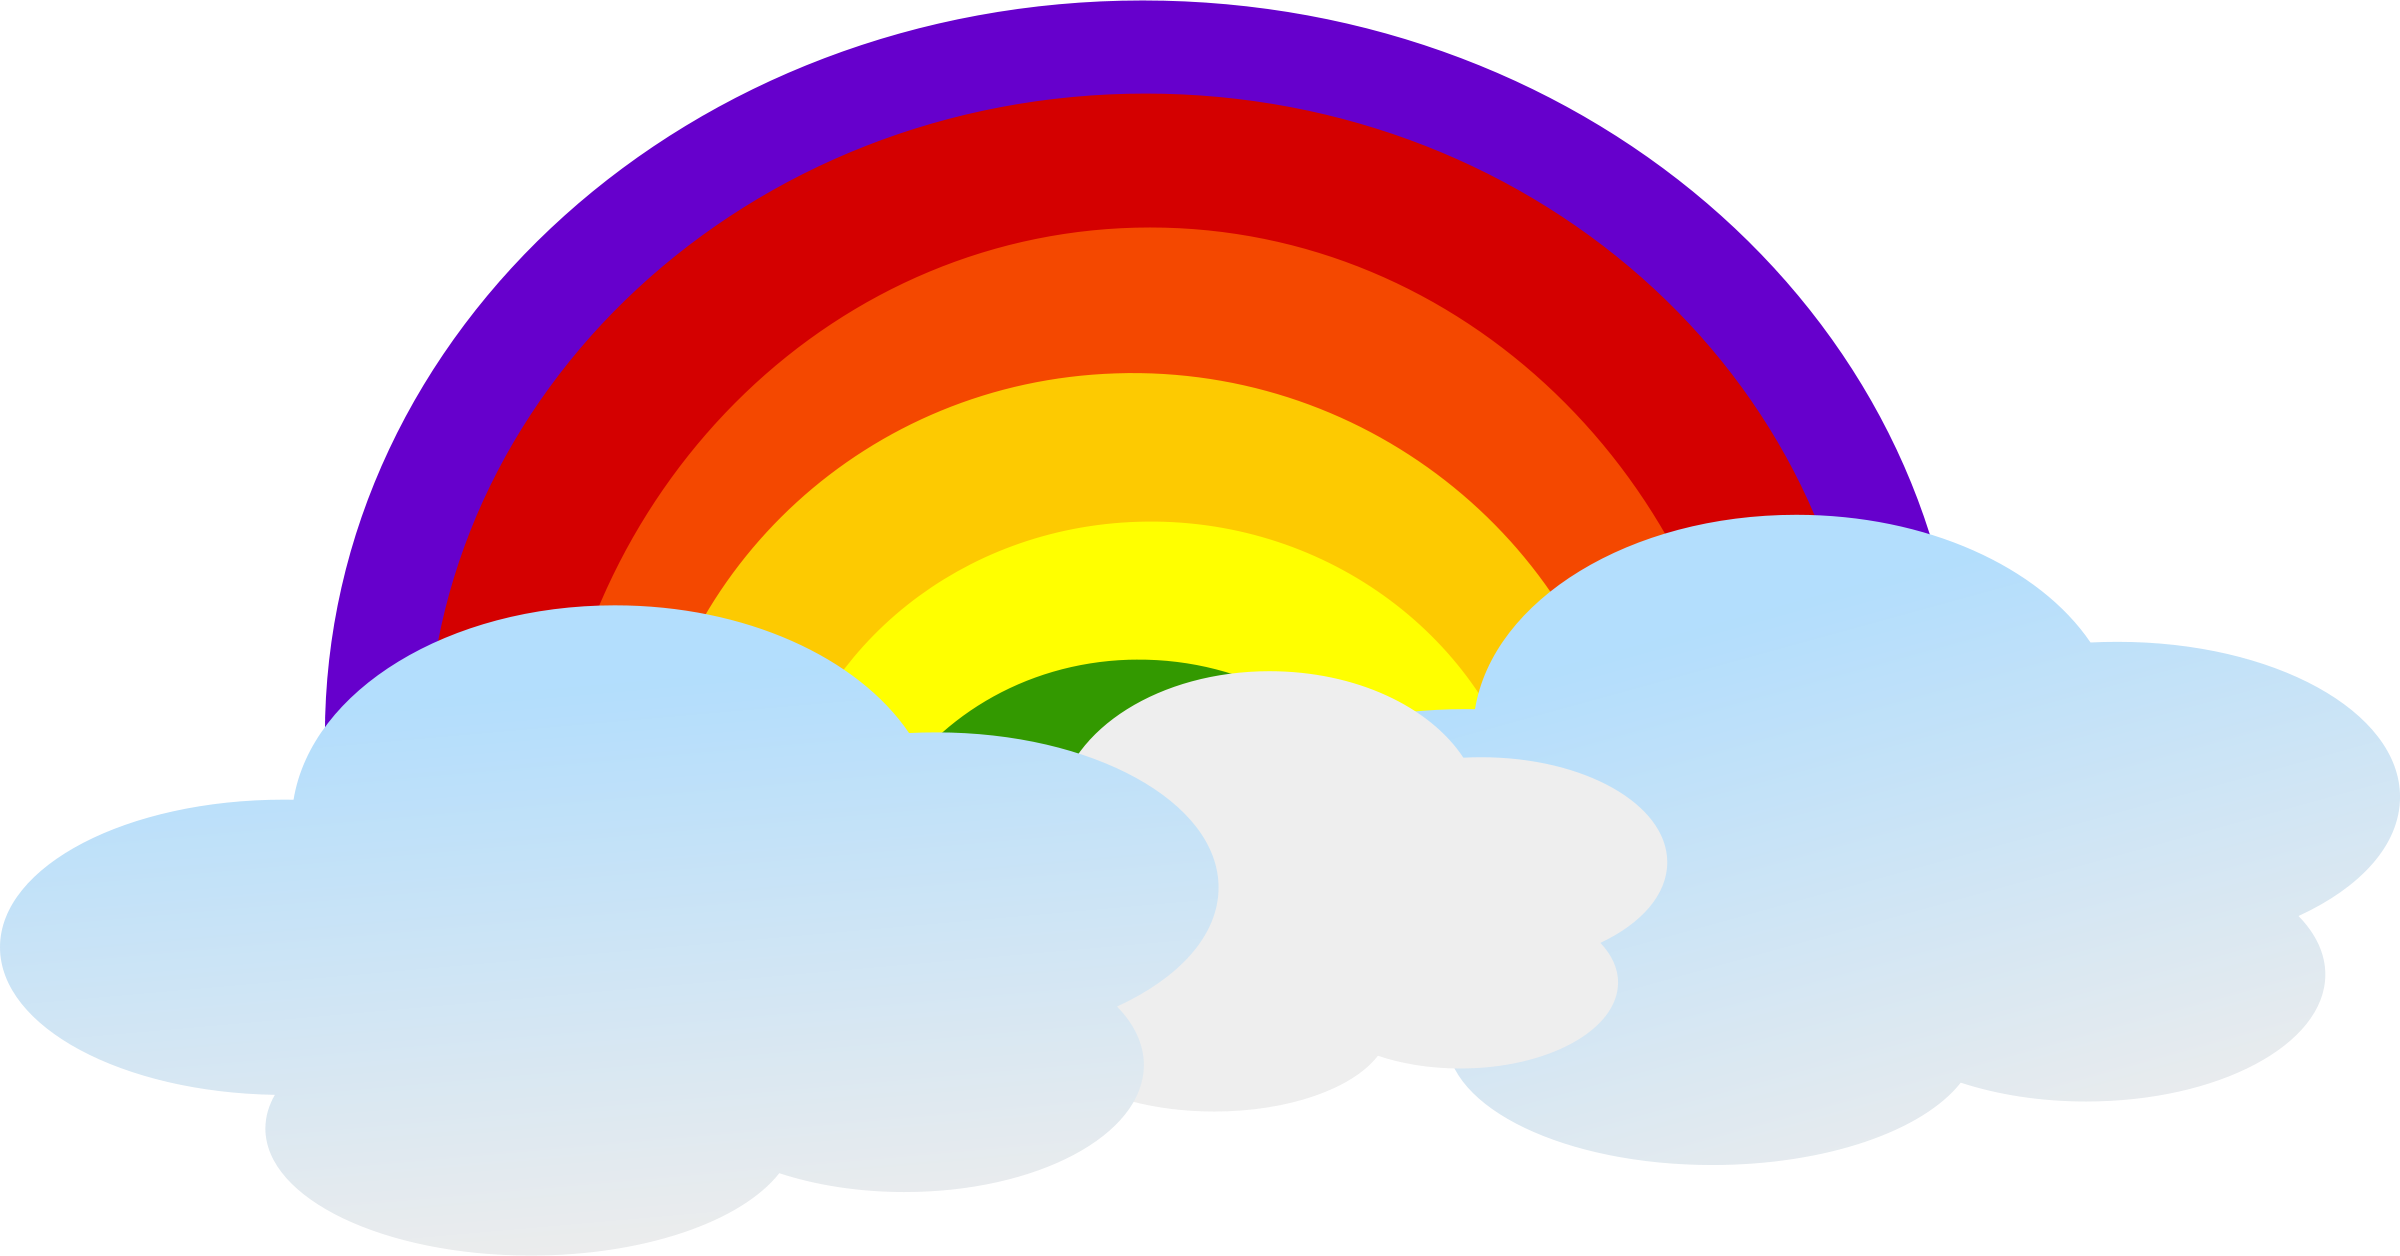 Rainbow And Cloud Clipart